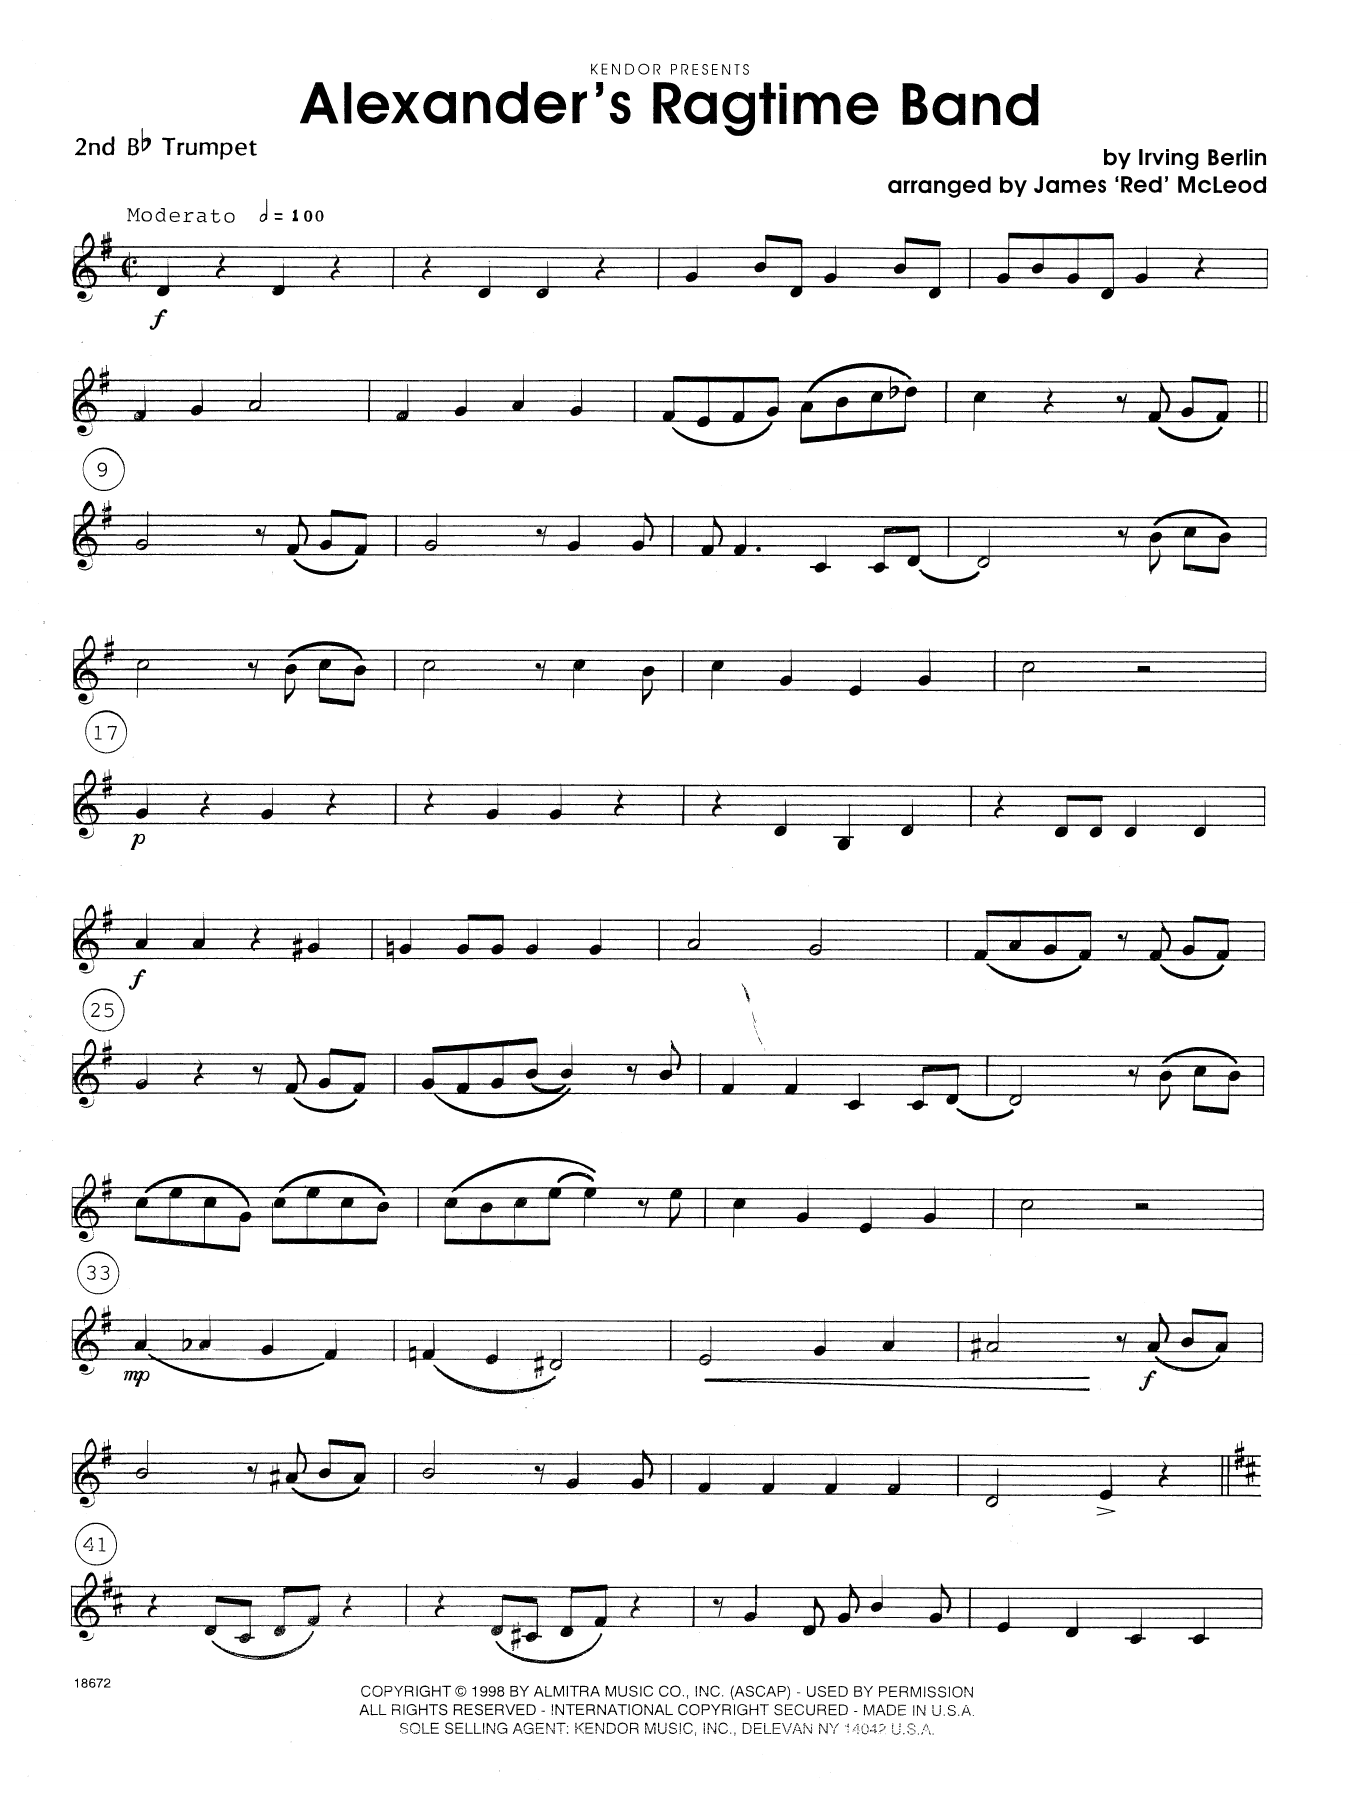 Download James 'Red' McLeod Alexander's Ragtime Band - 2nd Bb Trump Sheet Music